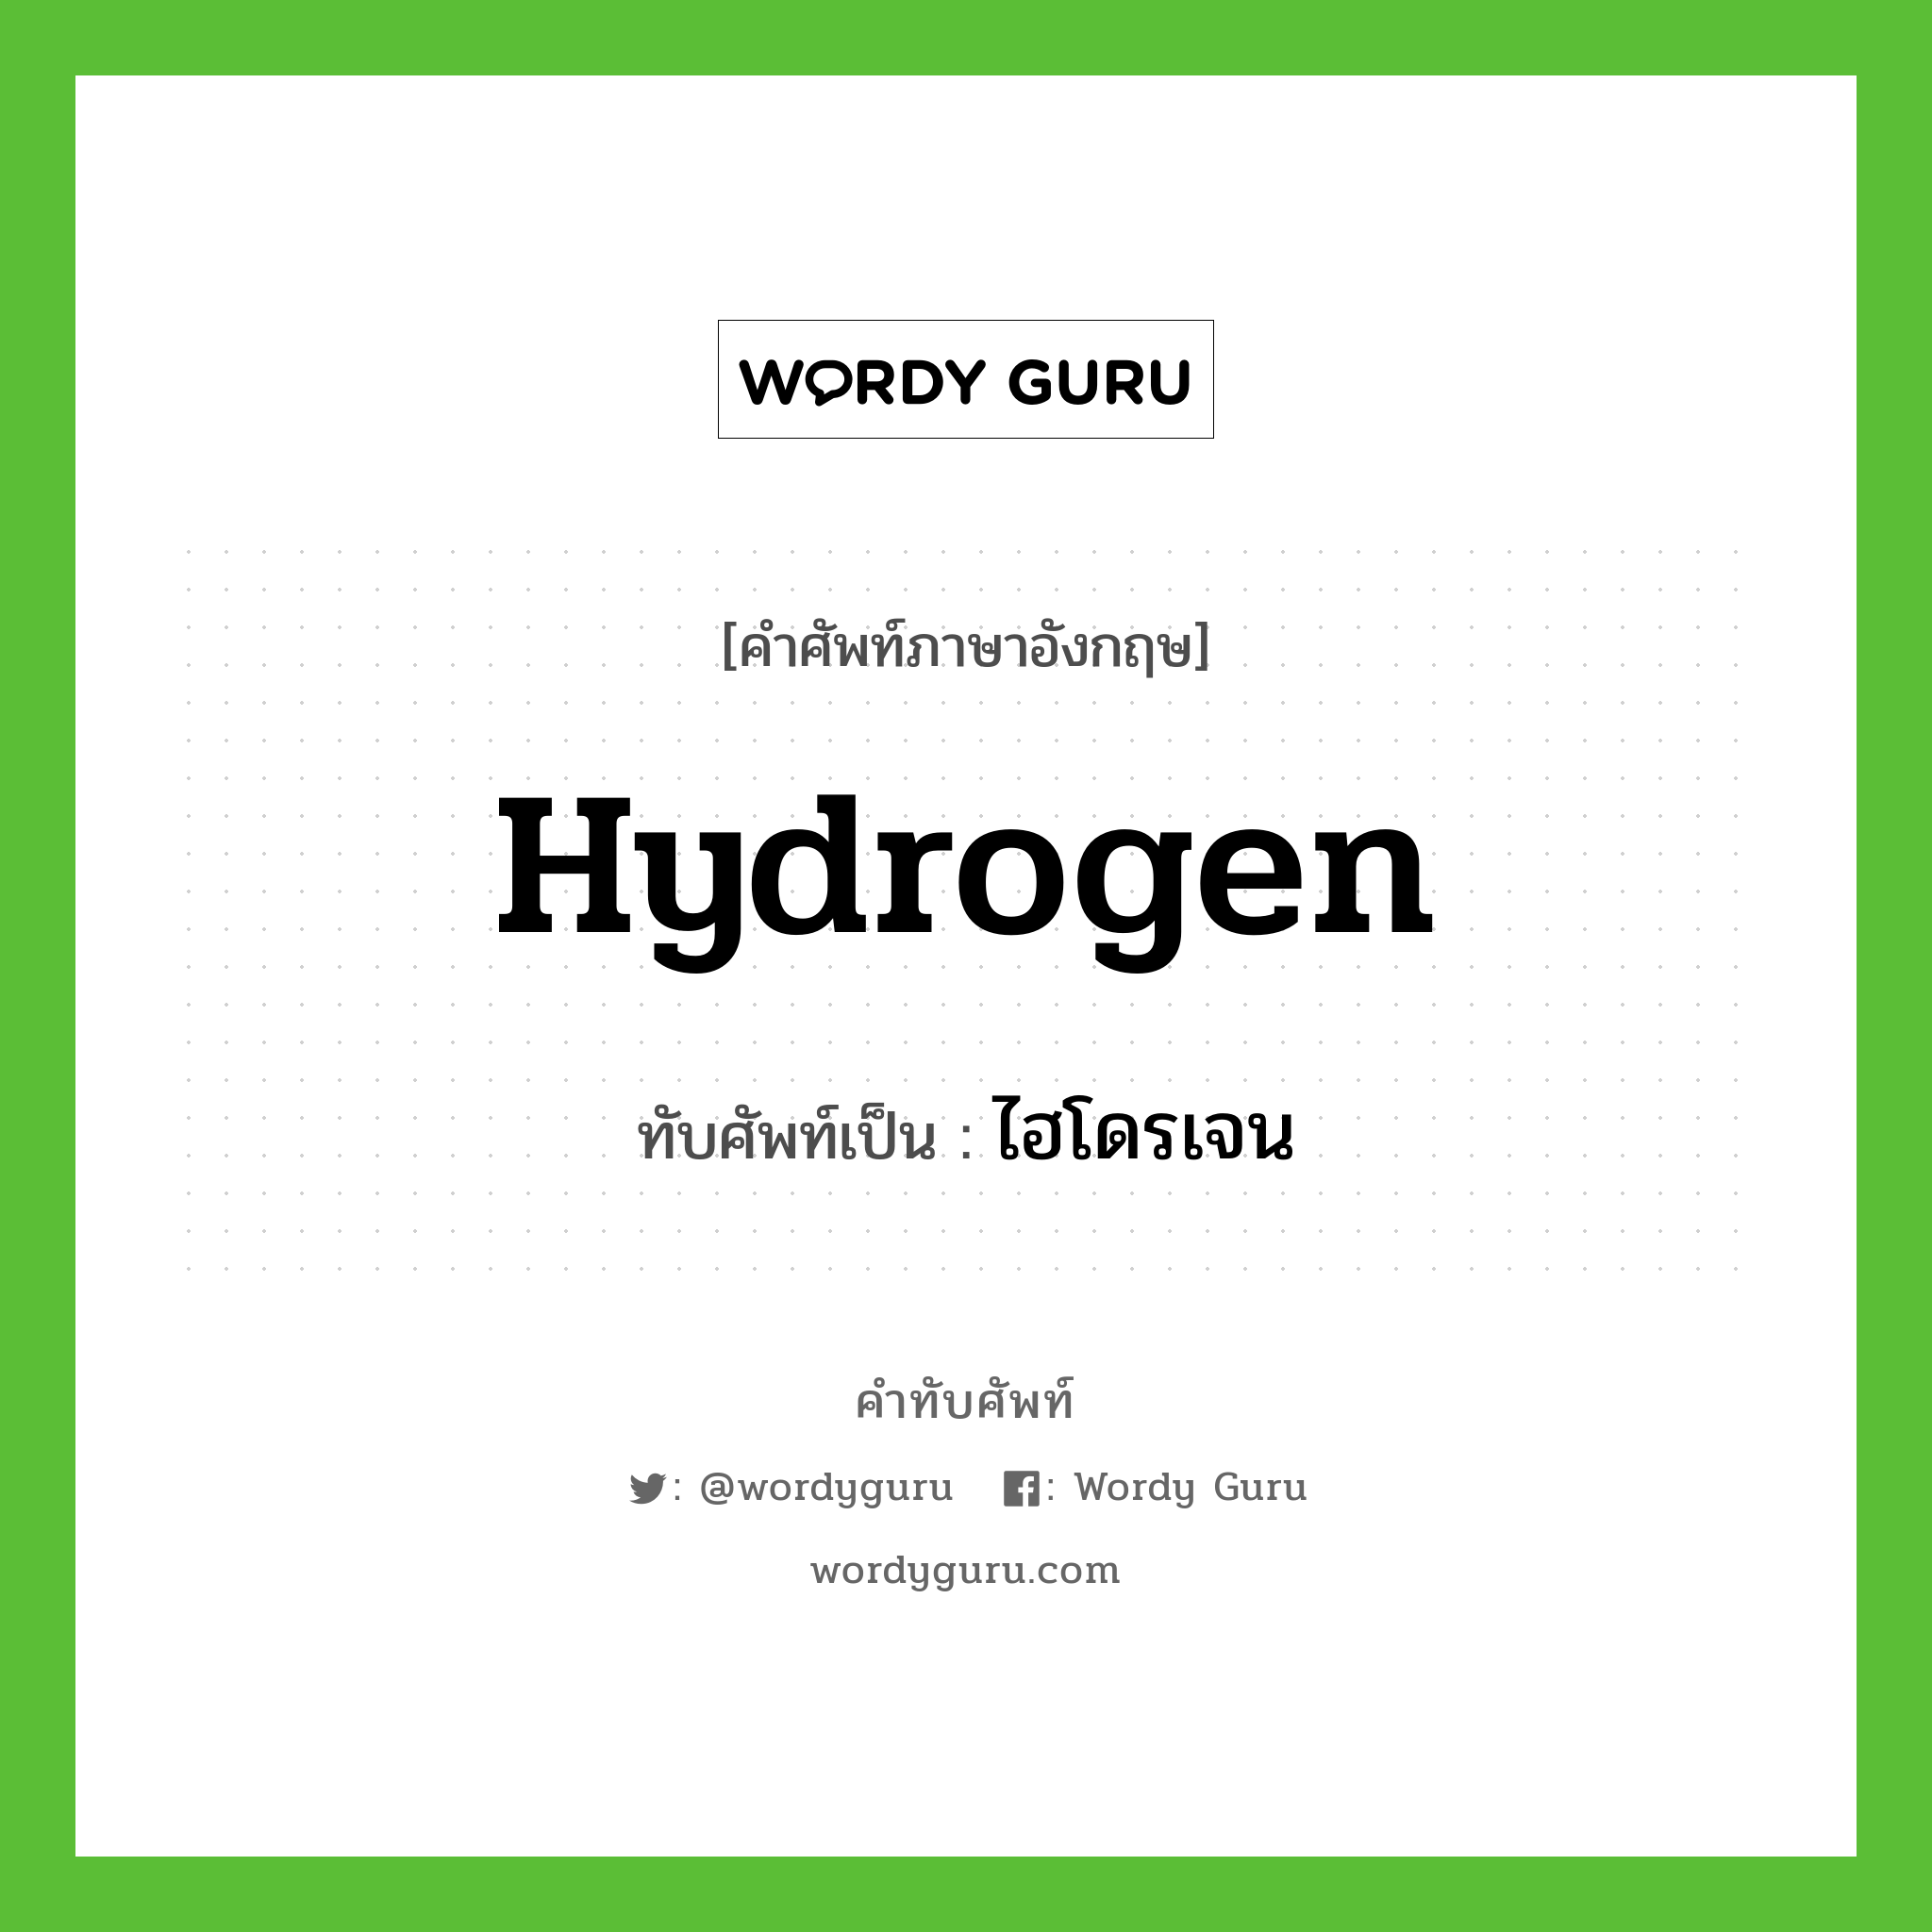 hydrogen เขียนเป็นคำไทยว่าอะไร?, คำศัพท์ภาษาอังกฤษ hydrogen ทับศัพท์เป็น ไฮโดรเจน